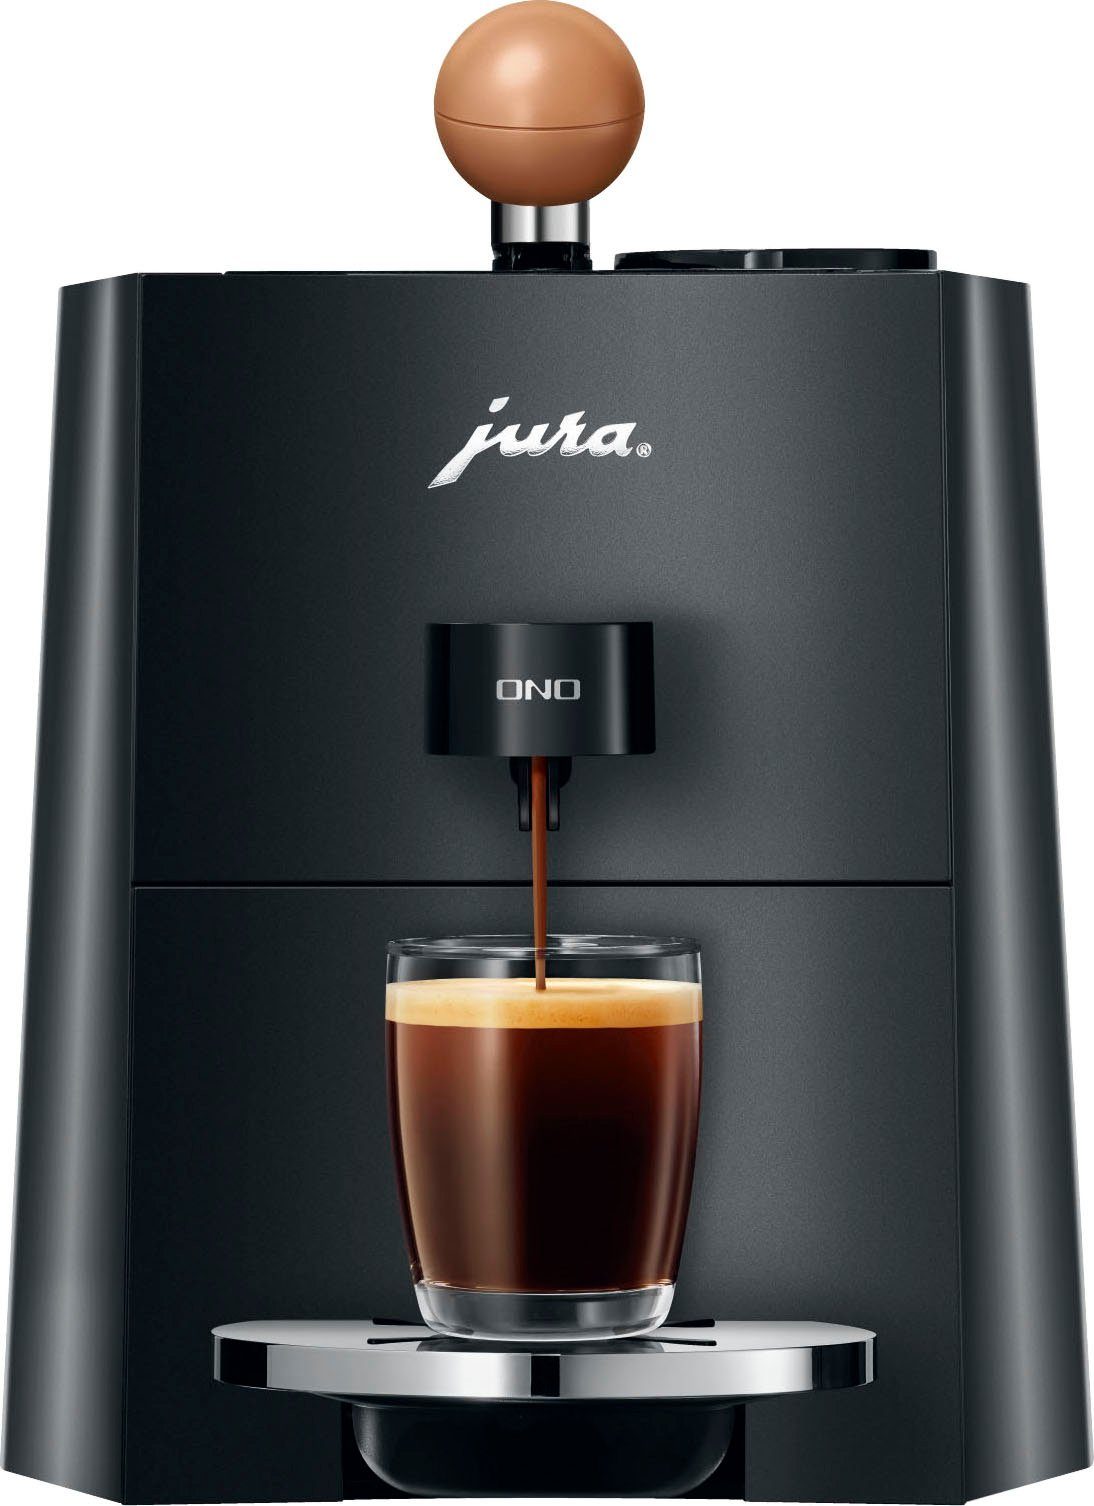 Kaffeehalbautomat 15505 ONO, Espressomaschine JURA